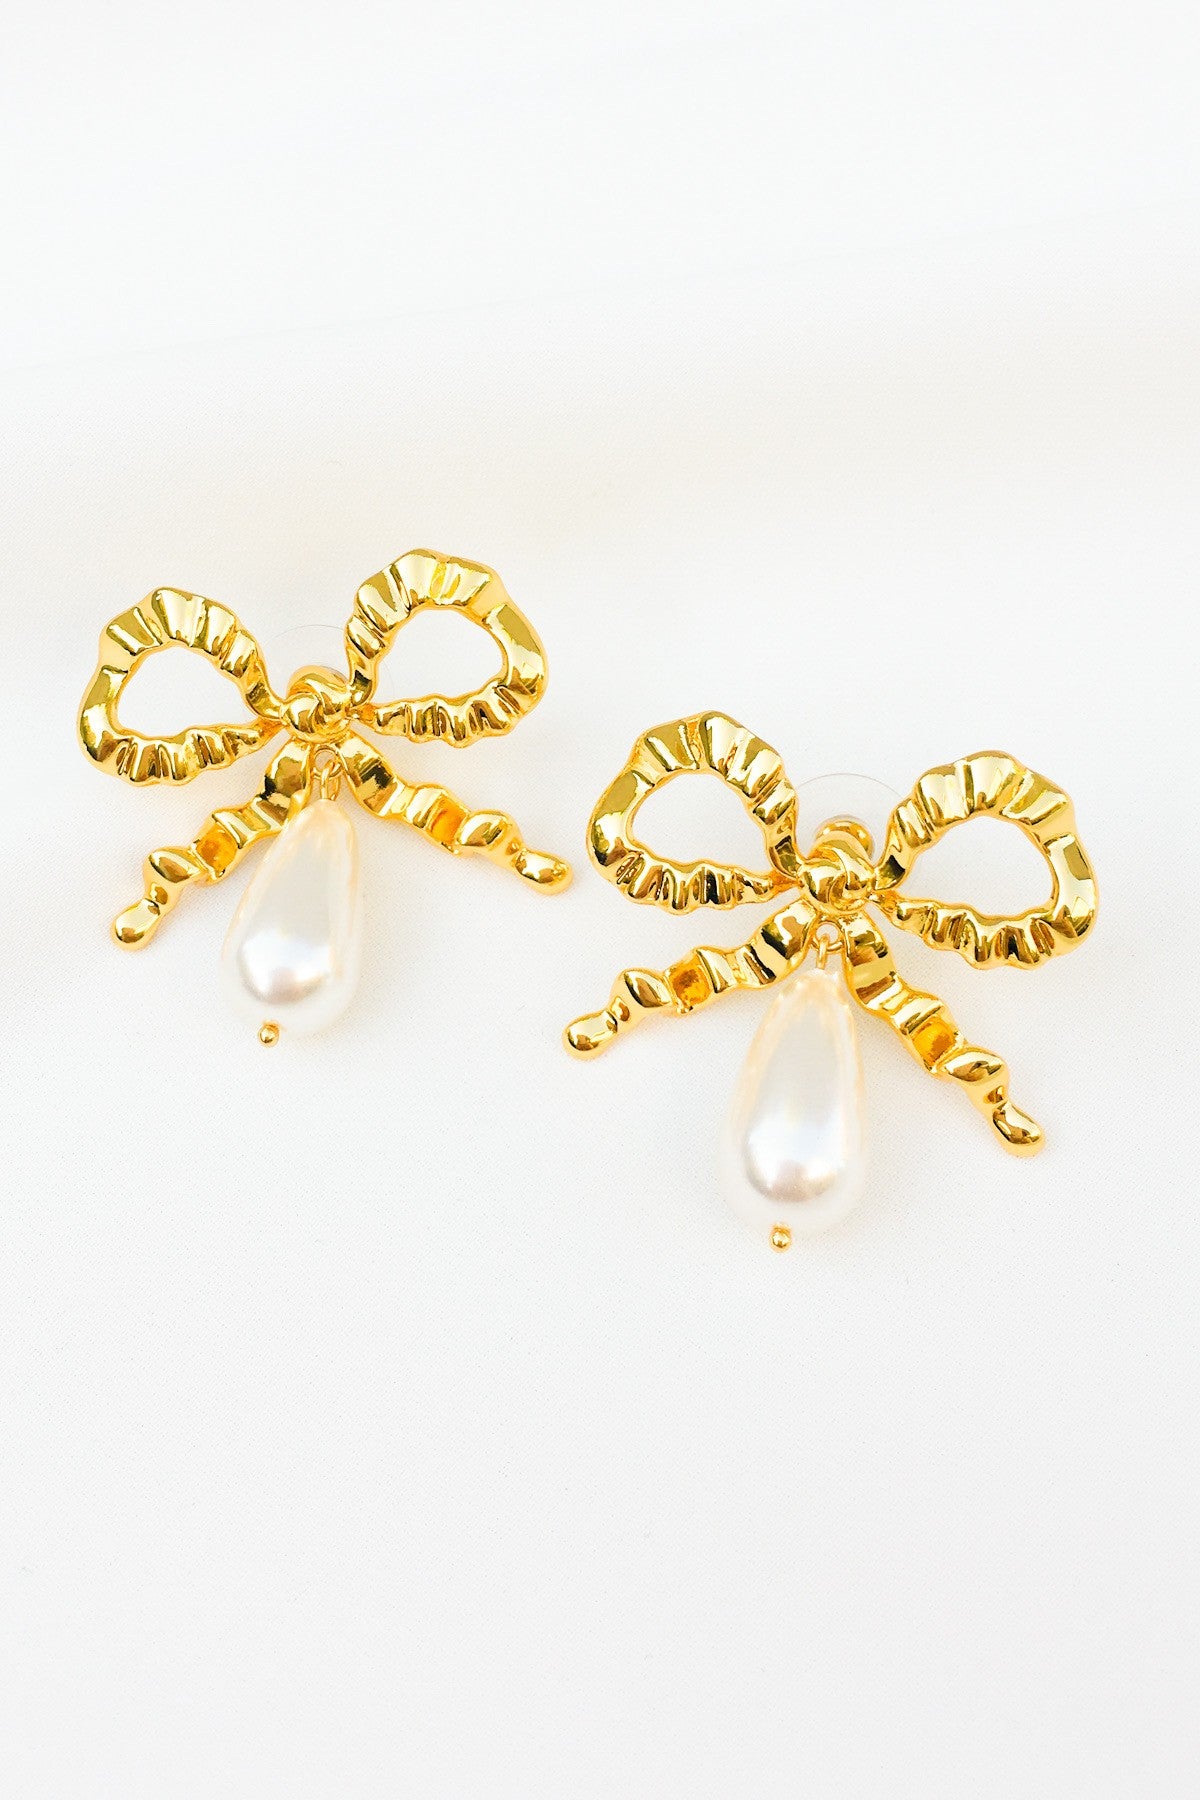 SKYE San Francisco SF California shop ethical sustainable modern chic designer women jewelry Anissa 18K Gold Bow Earrings 3